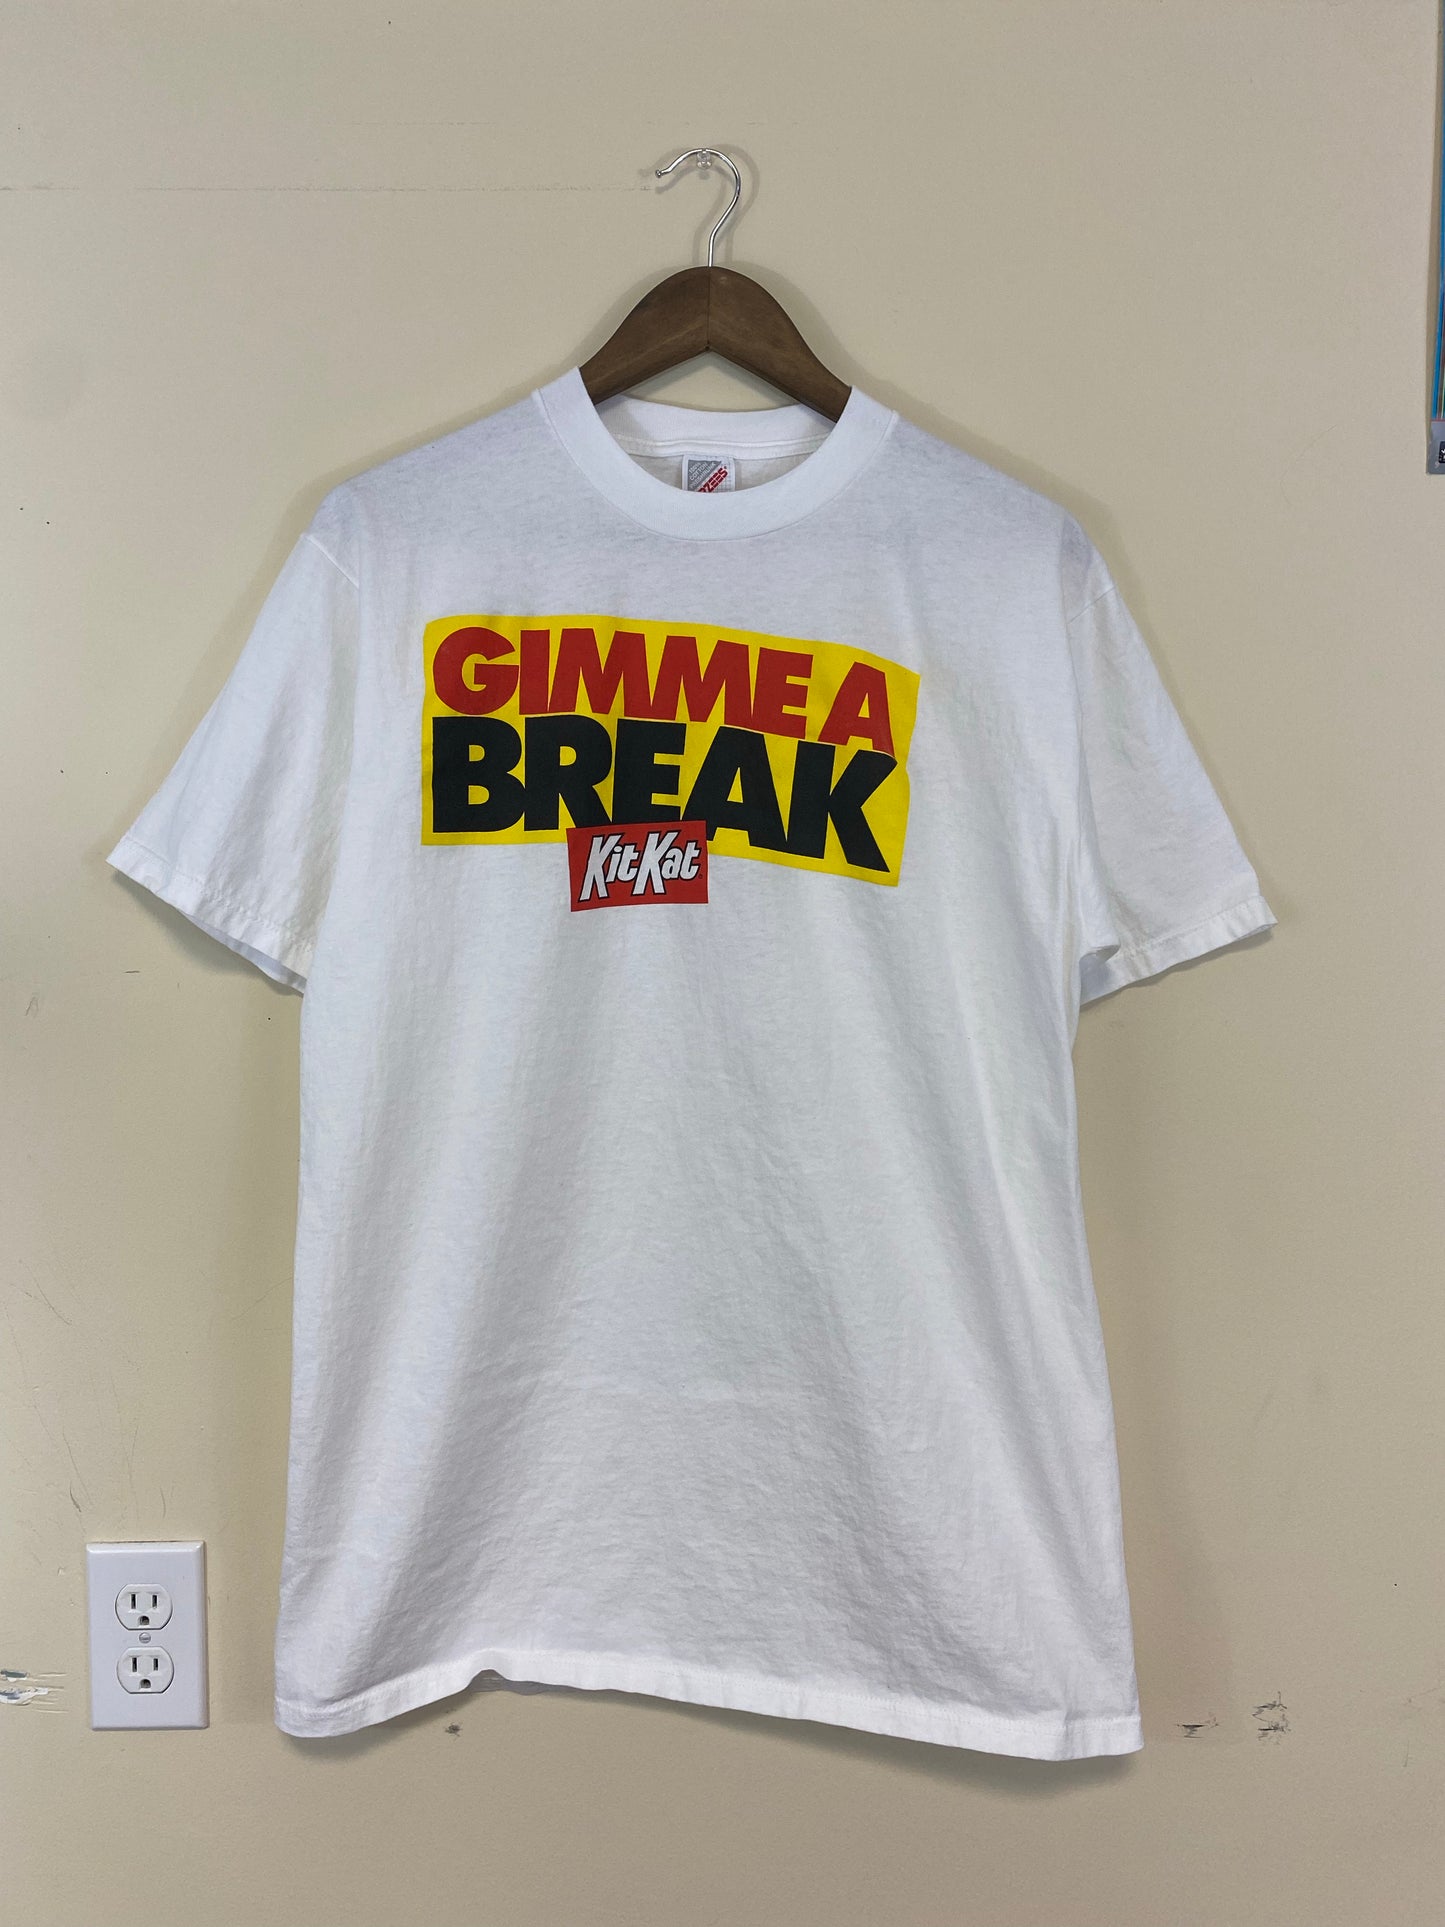 1990’s “Gimme a Break” Kit Kat Promo T-Shirt